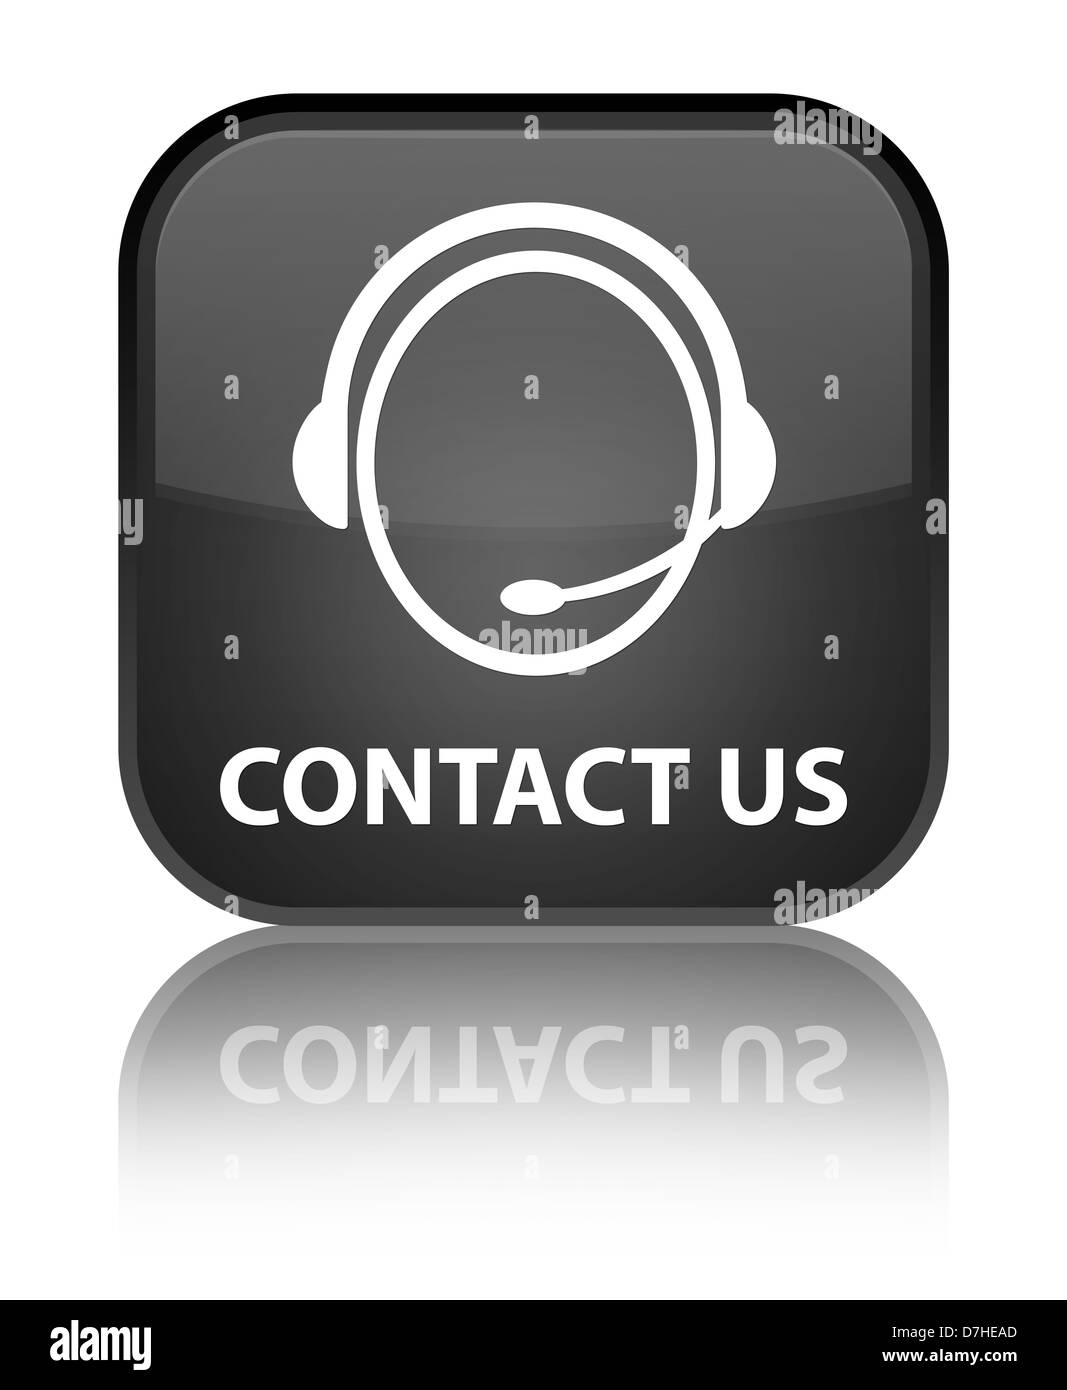 Contact us black square button Stock Photo